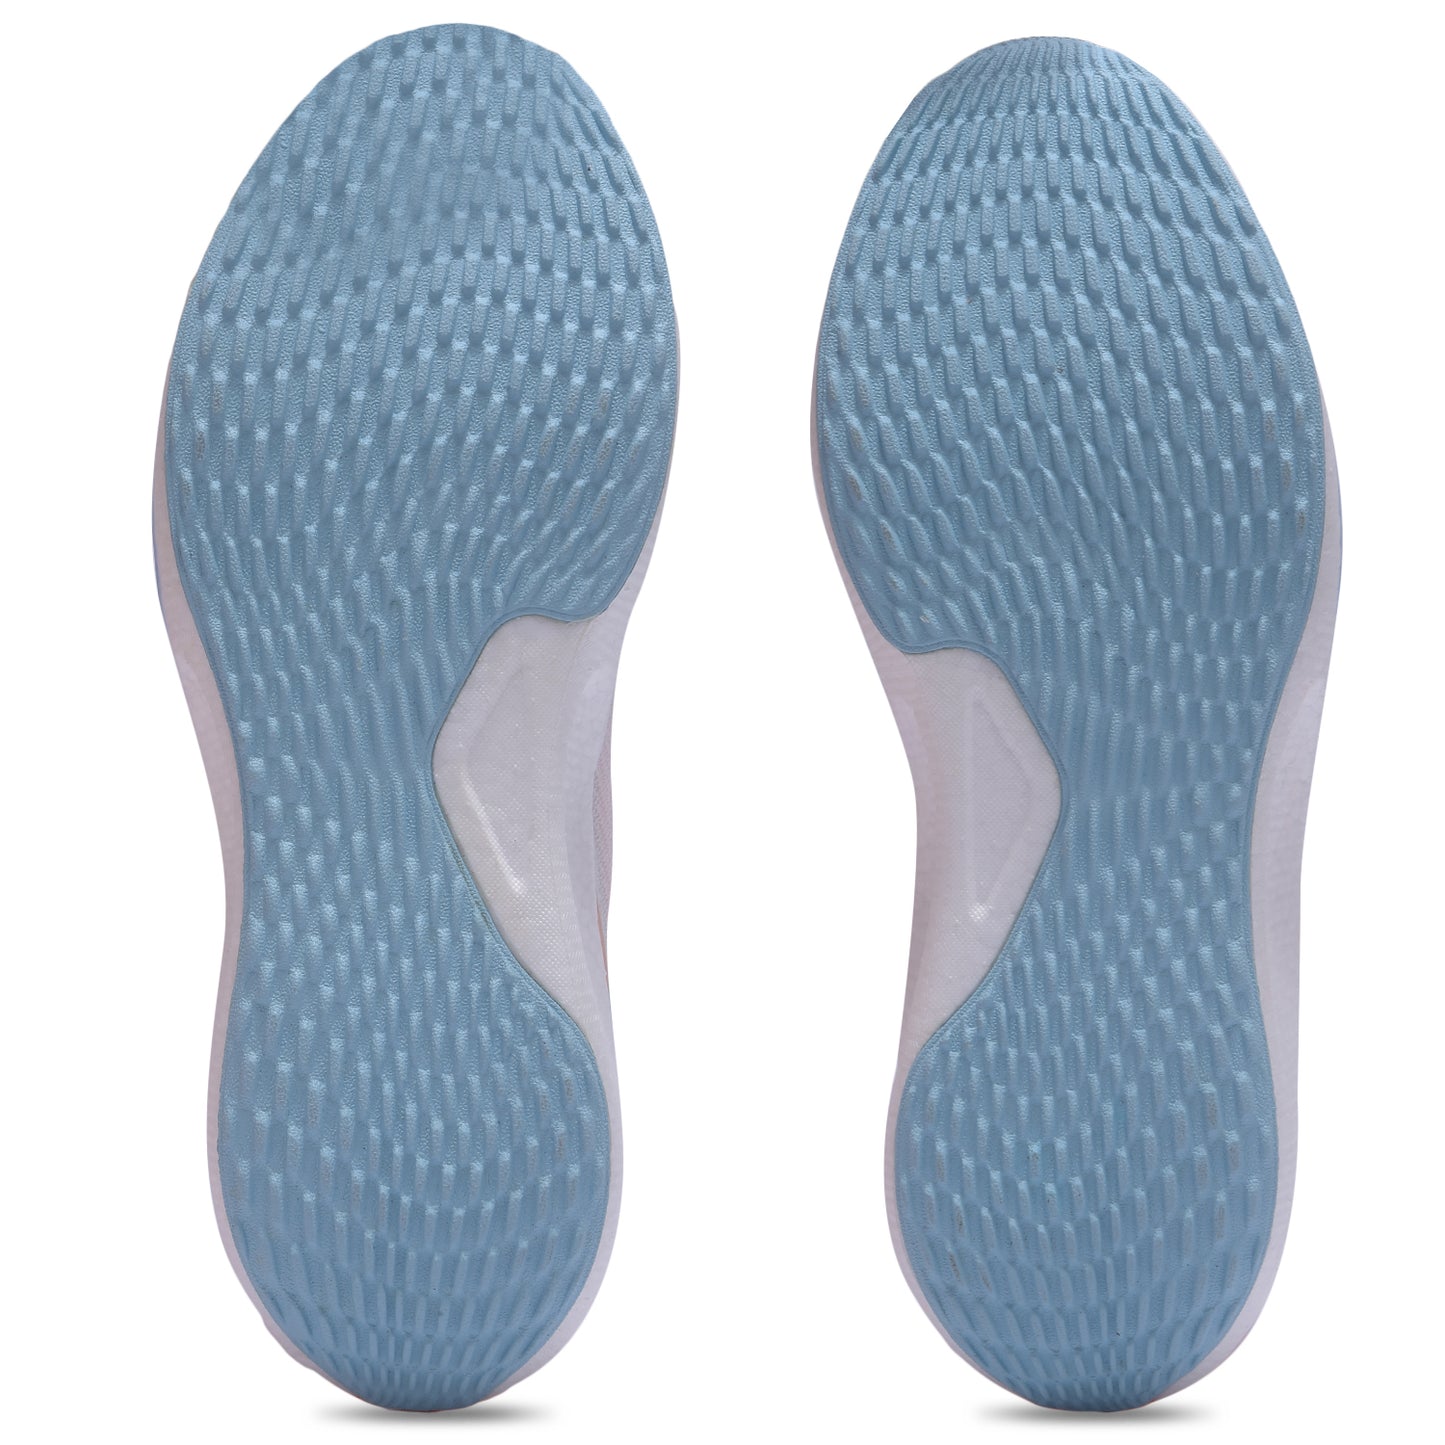 Abros Future ASSG1368 WHITE/ICE BLUE Mens Sports Shoes